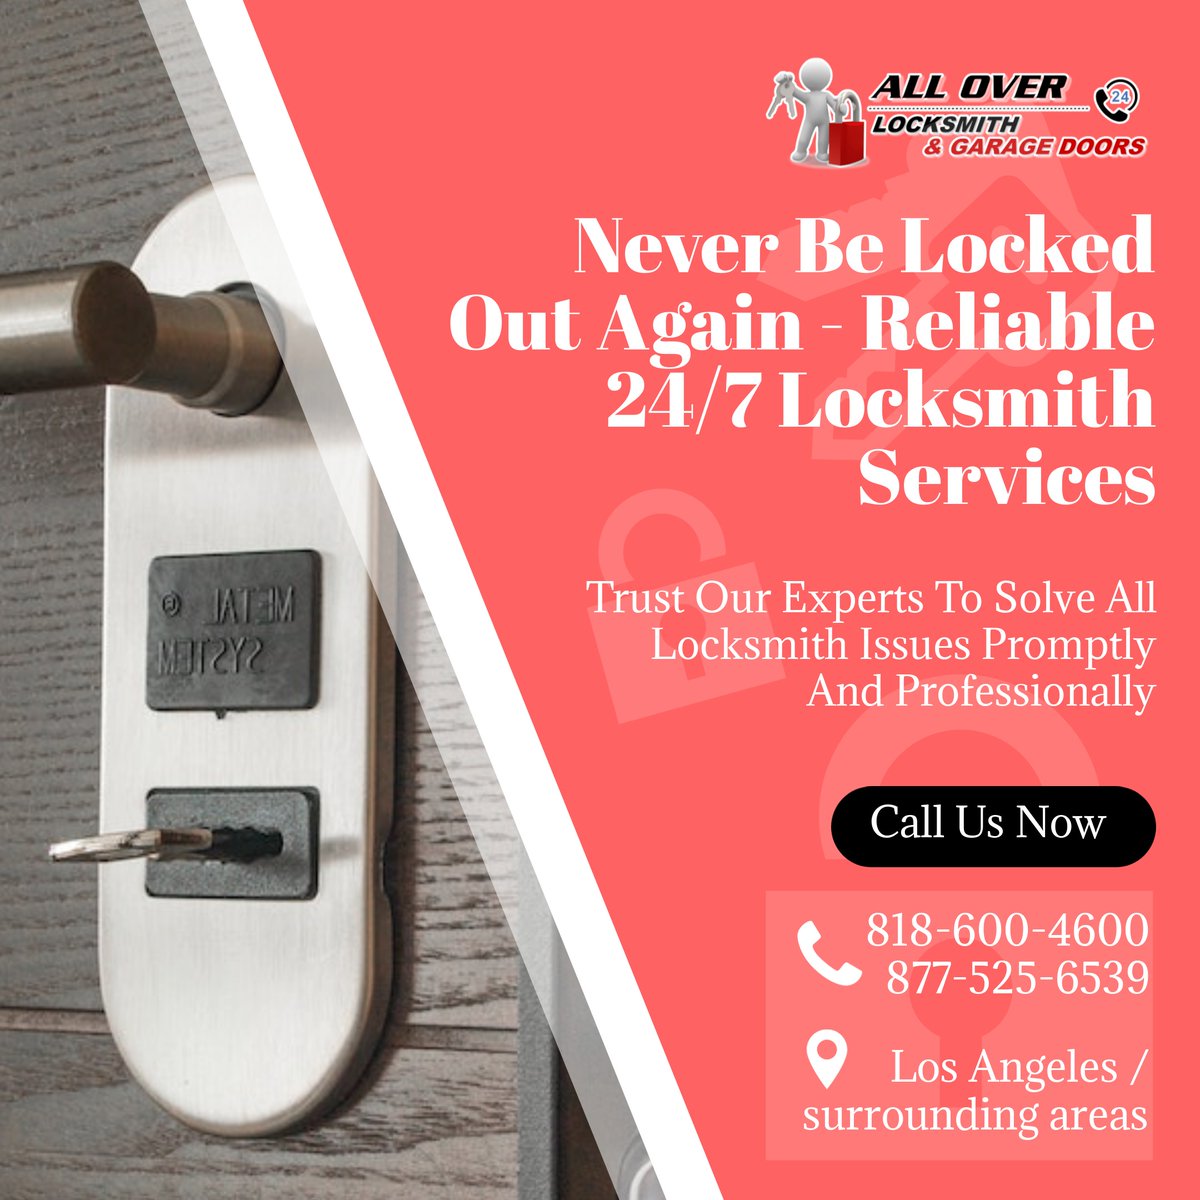 Find more information in our website
alloverlocknkey.com

Or Call Us Now
818-600-4600
877-525-6539

#locksmith #locksmiths #locksmithservice #locksmithlife #mobilelocksmith #locks #keyservice #keys #smartkey #lostkeys #lockdown #rekey #keycutting